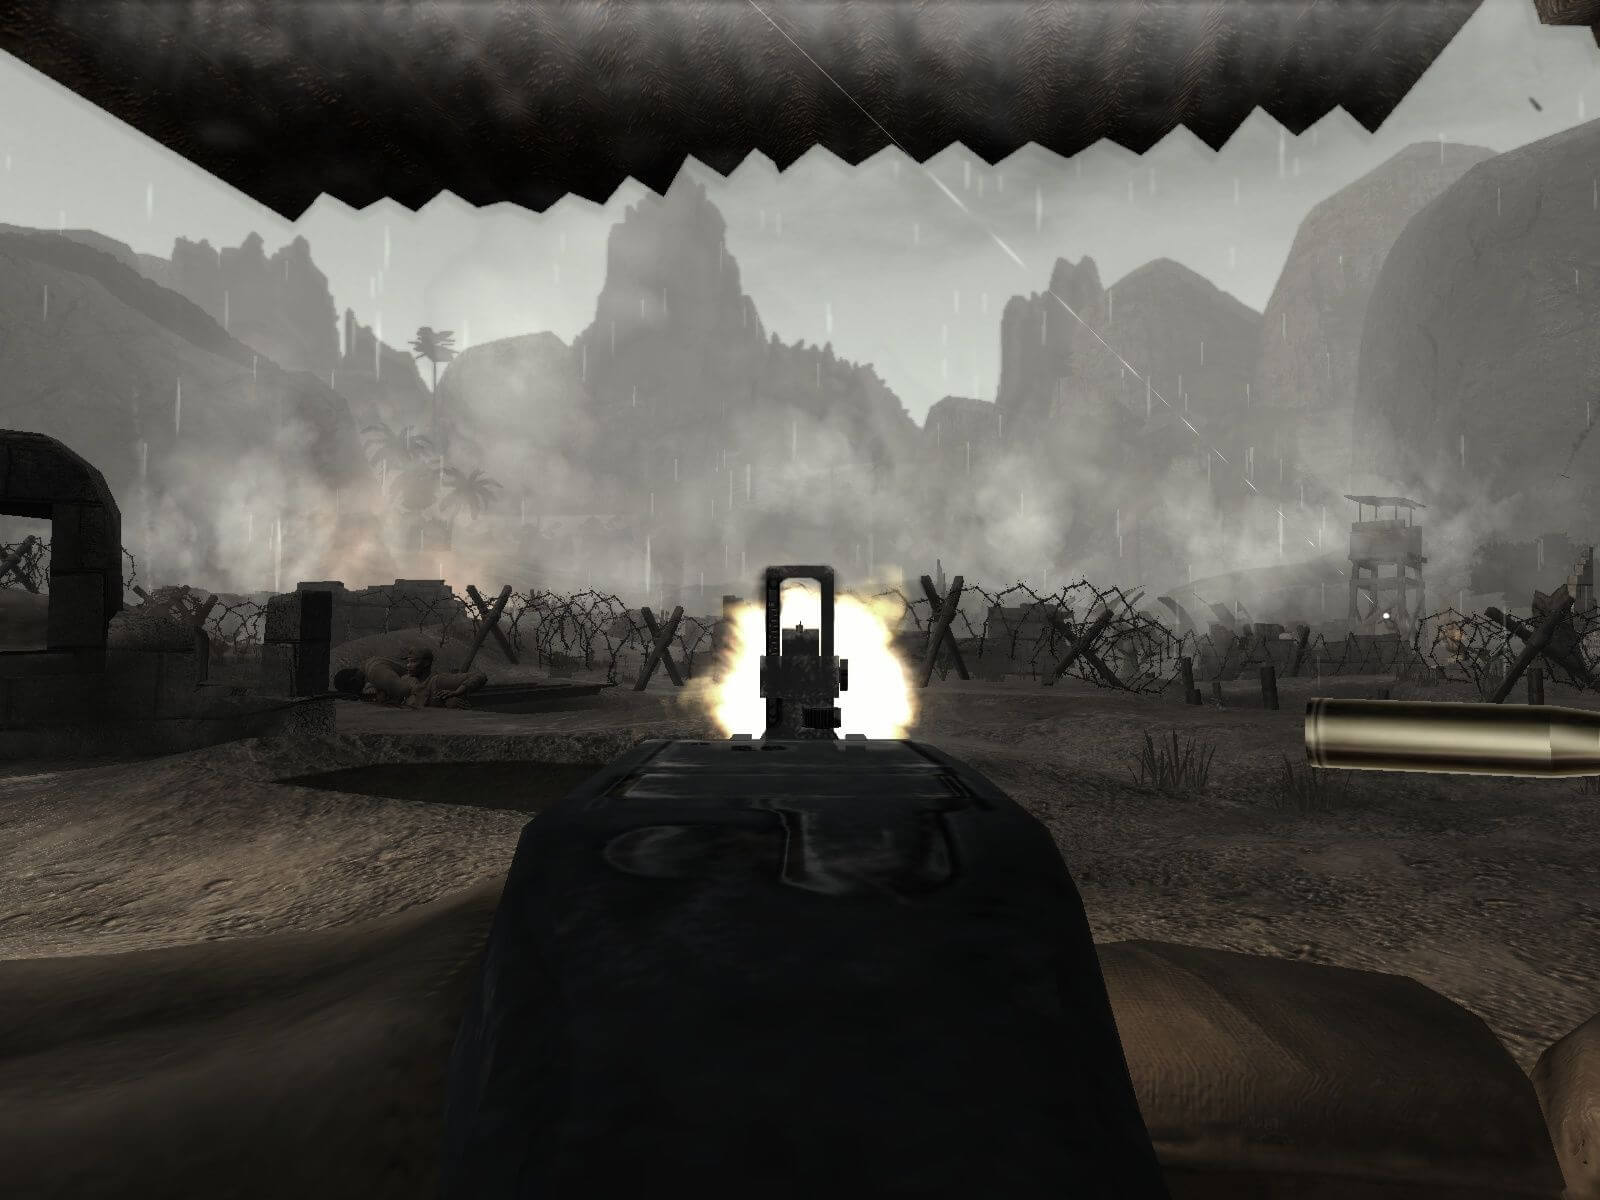 Shellshock 2: Blood Trails for Xbox360